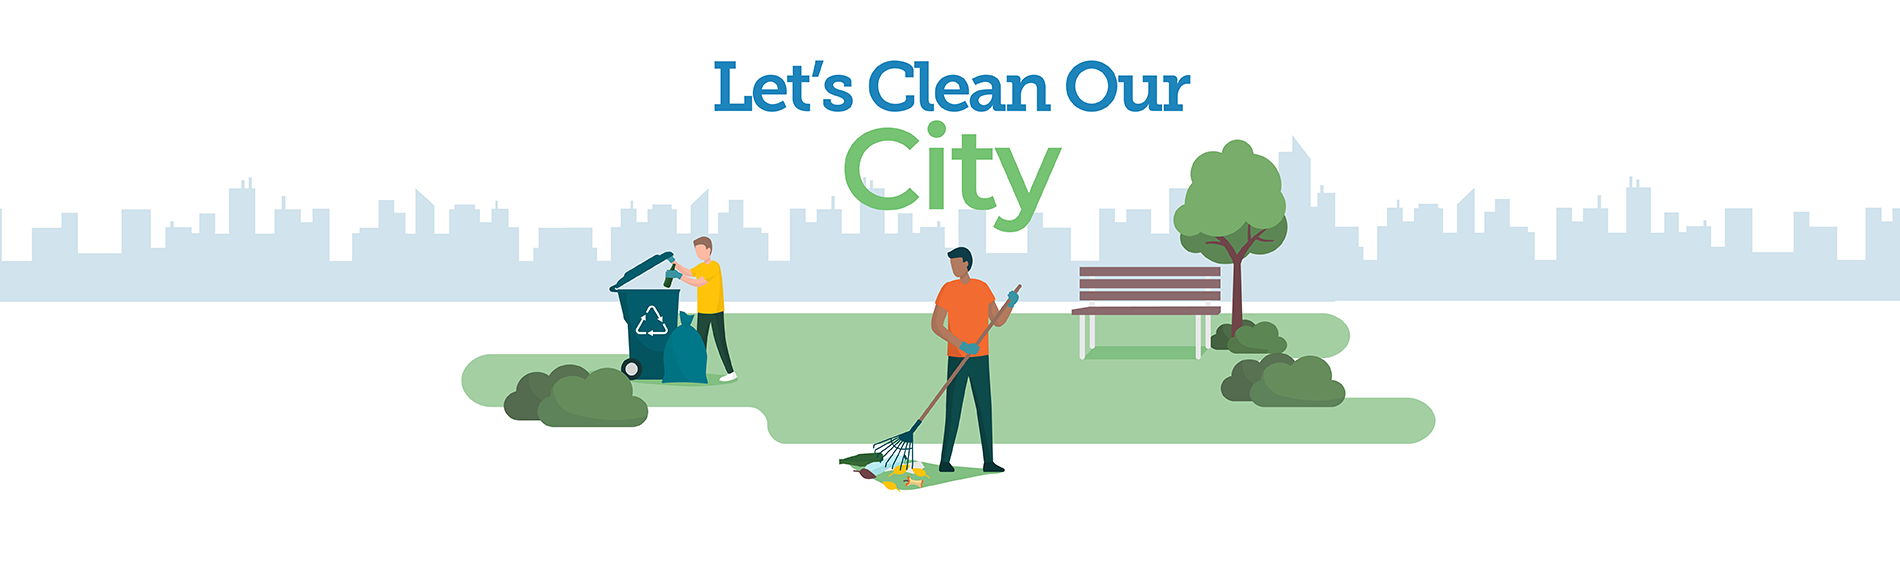 Let's Clean Our City